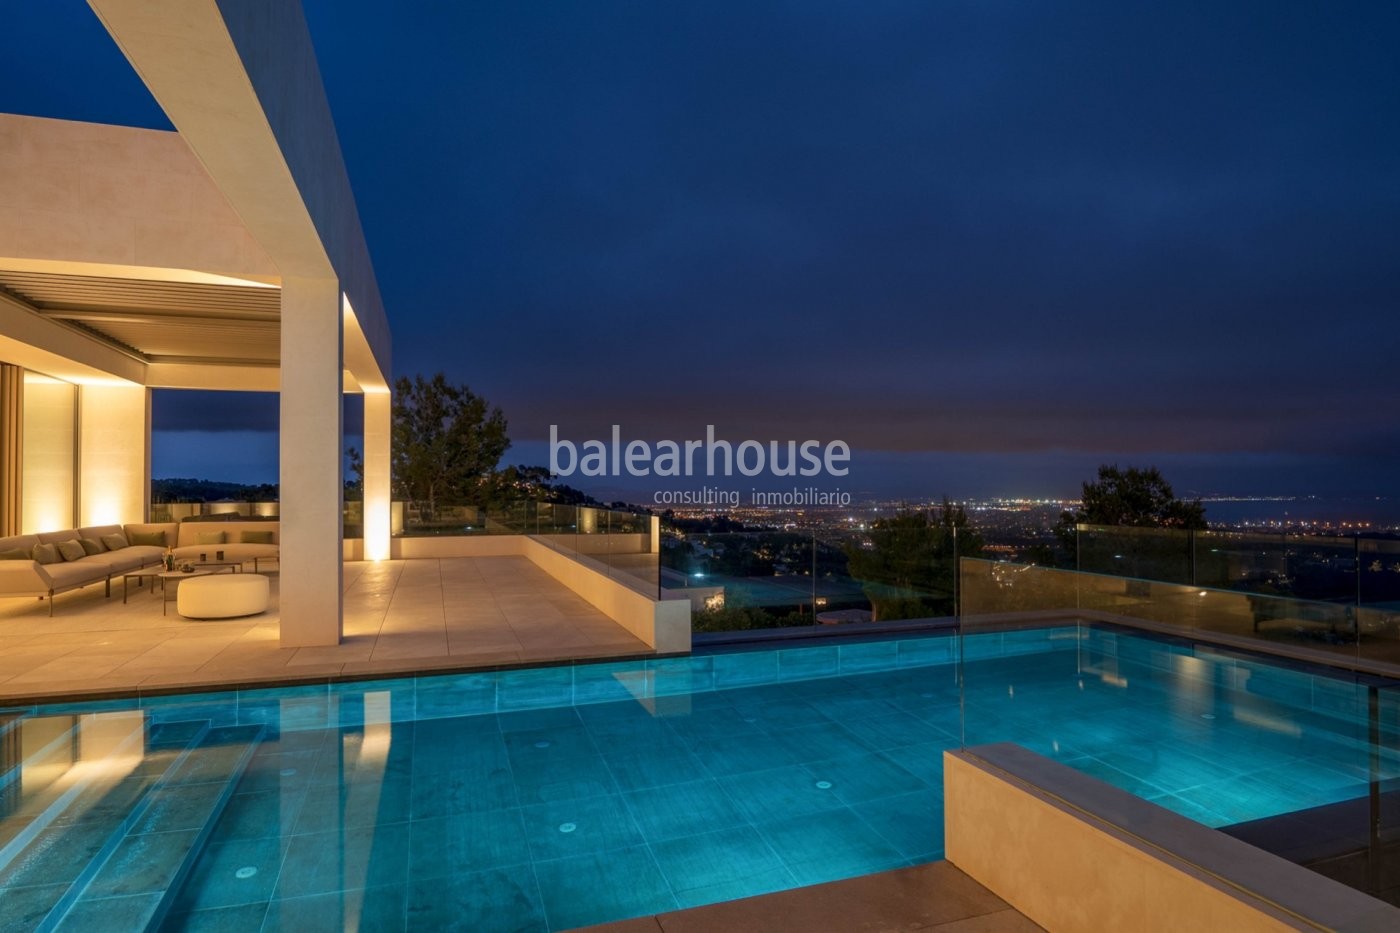 Avantgarde und Design mit atemberaubendem Meerblick in dieser neu gebauten Villa in Son Vida.